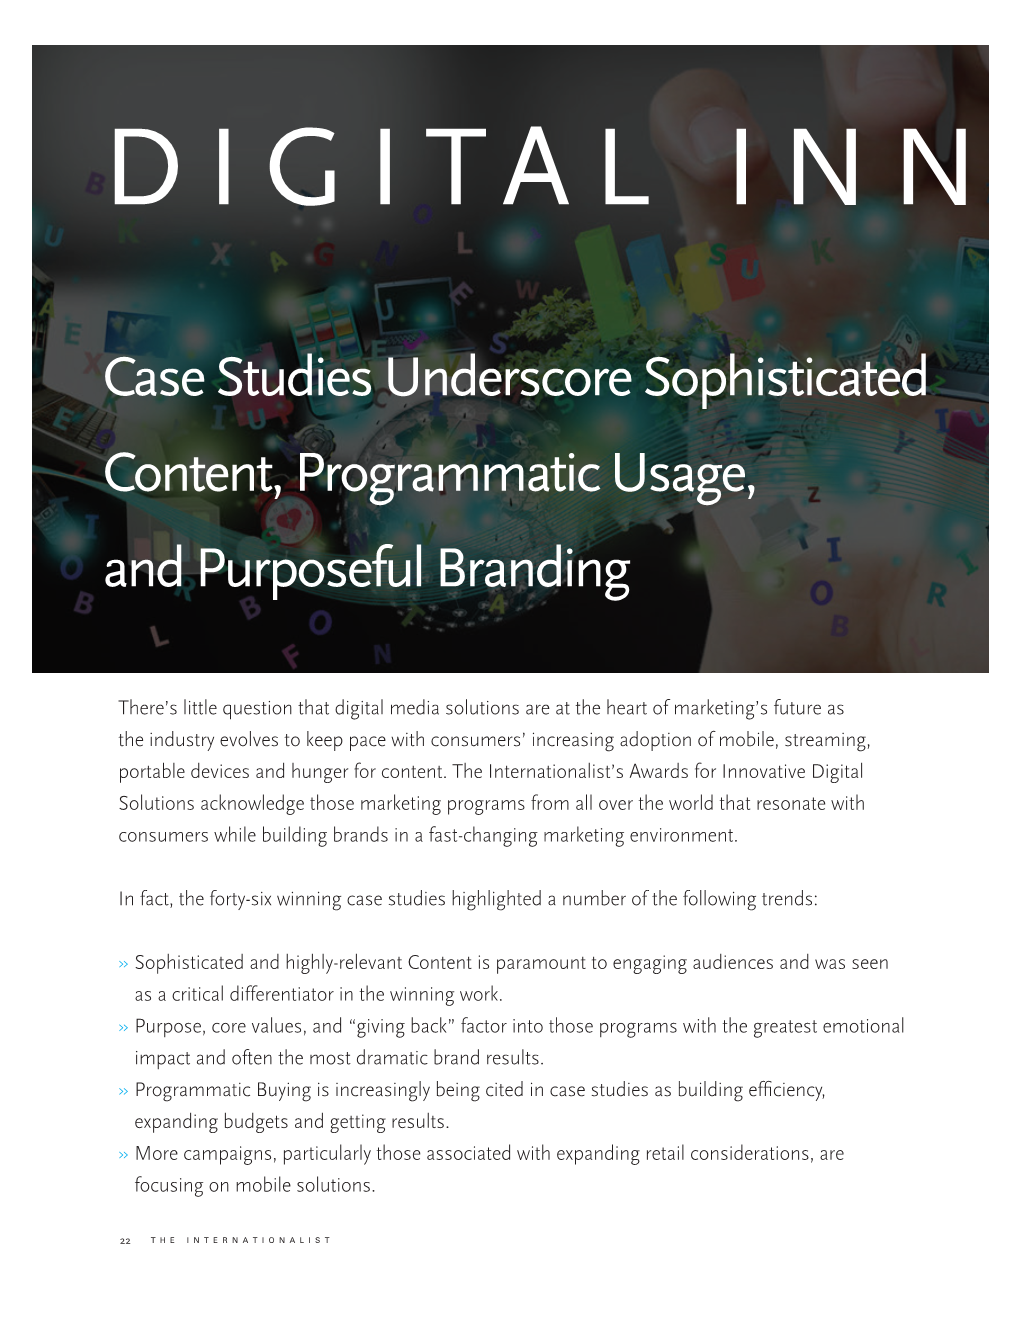 Case Studies Underscore Sophisticated Content, Programmatic Usage, and Purposeful Branding